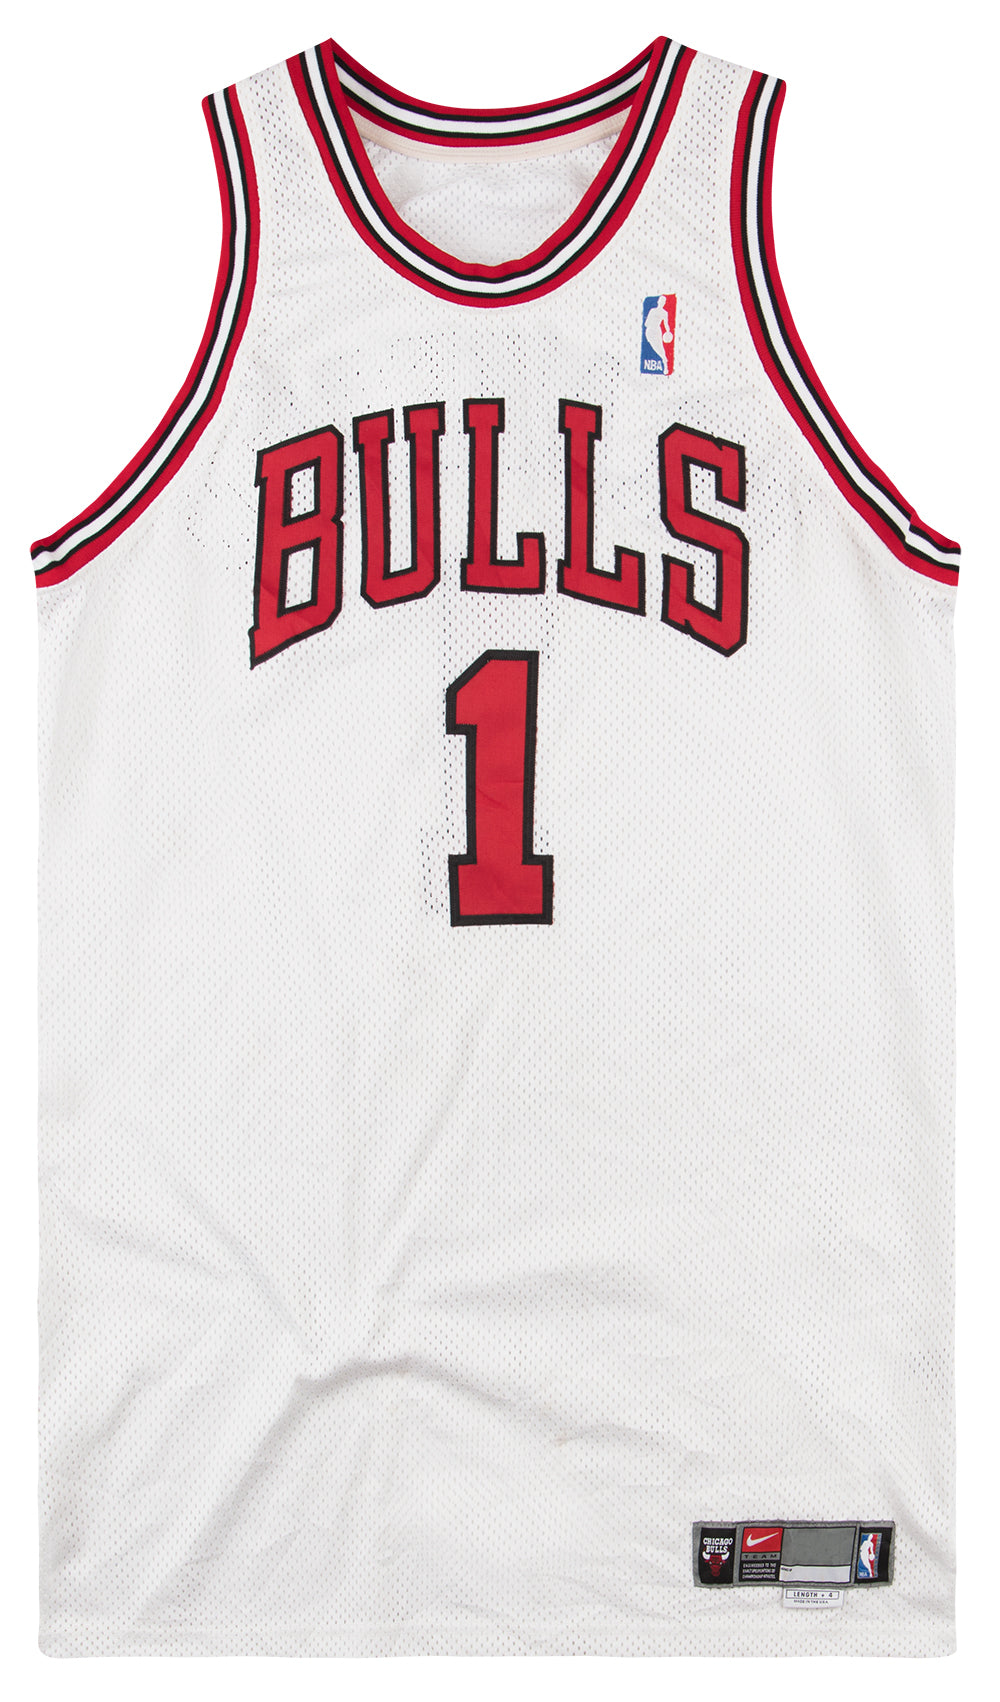 Derrick Rose - Chicago Bulls - Game-Worn Regular Season Jersey